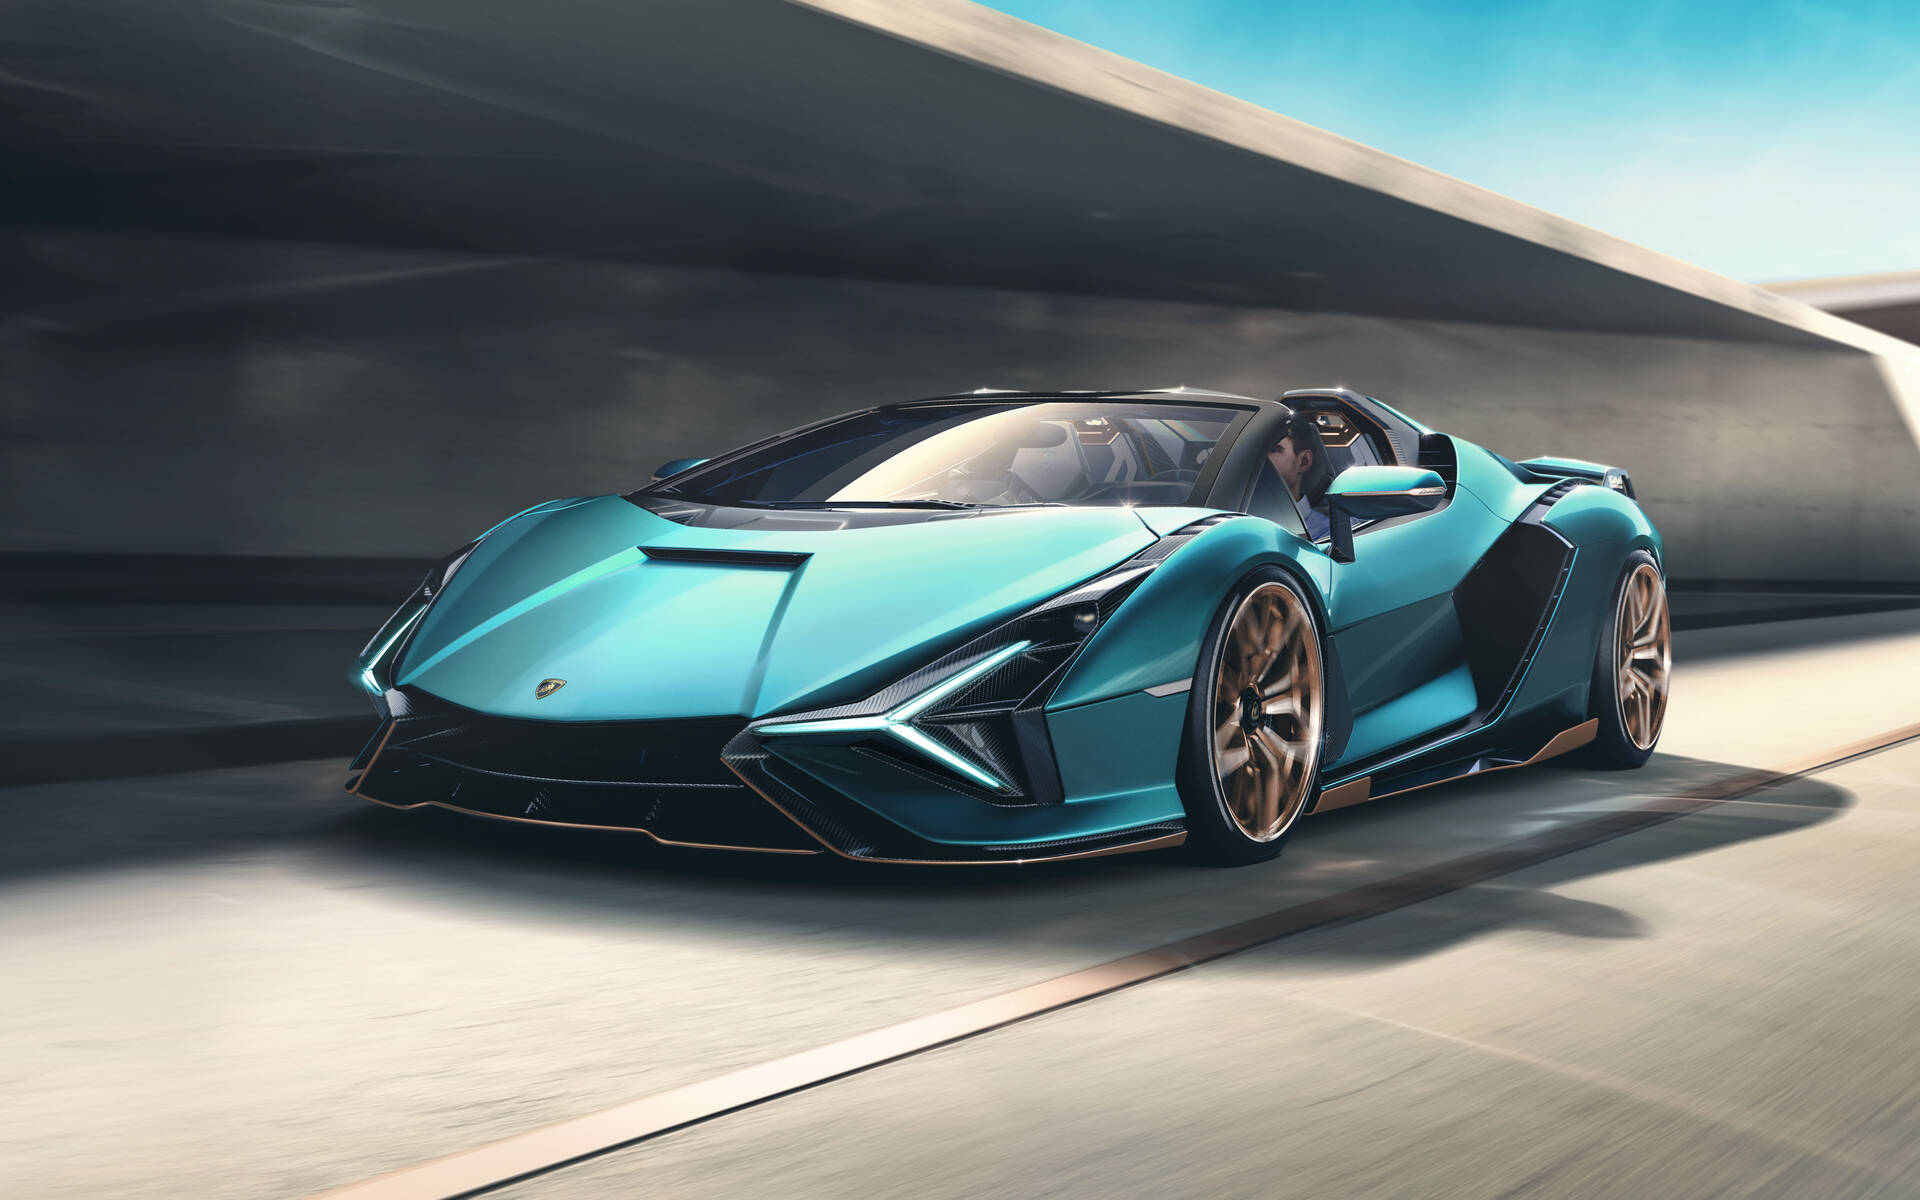 2020 Lamborghini Sian Is a High-Tech Hypercar With Hybrid Power